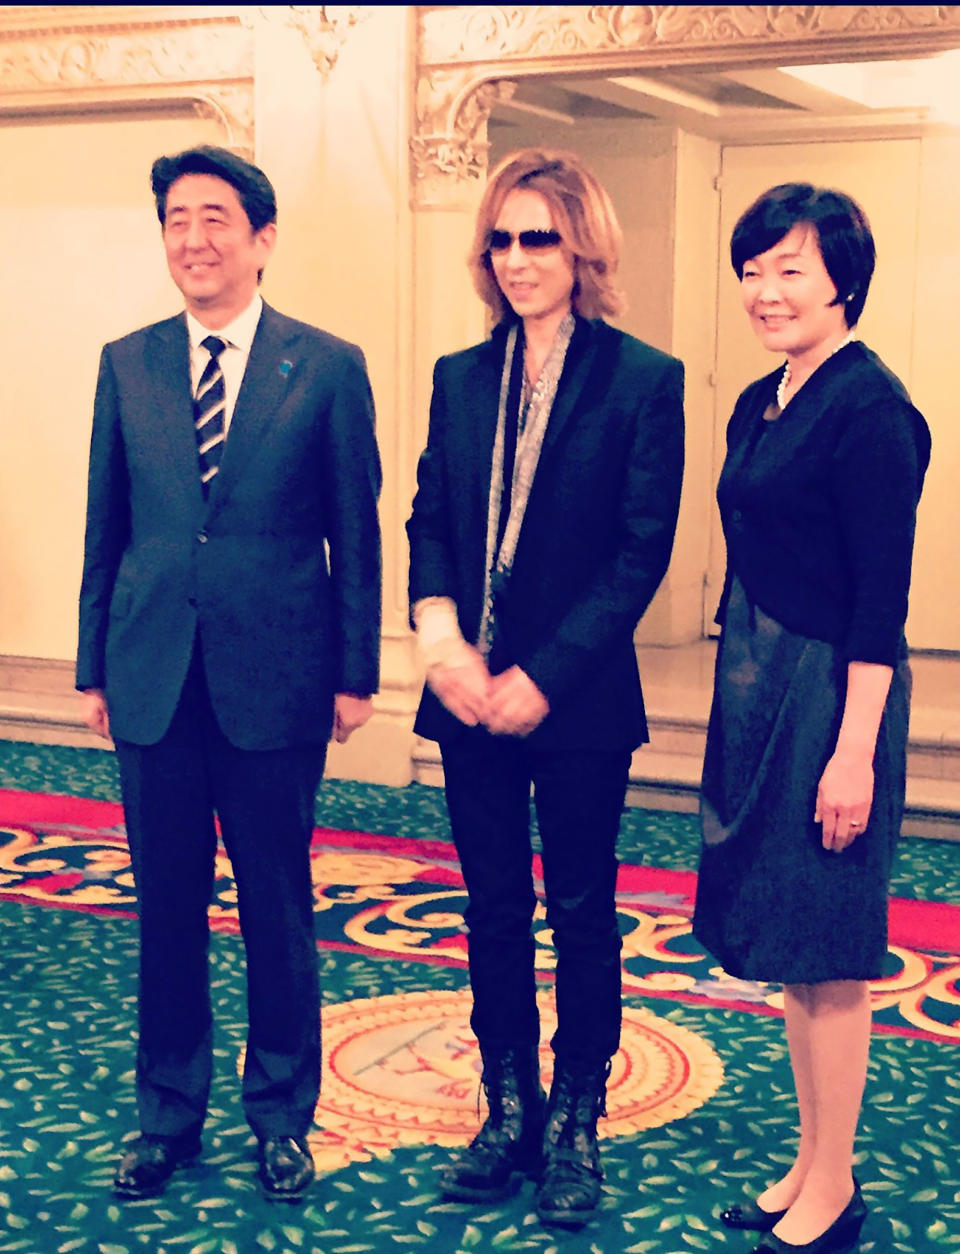 Prime Minister Abe with Yoshiki and the First Lady Akie Abe<span class="copyright">Courtesy Yoshiki Former</span>